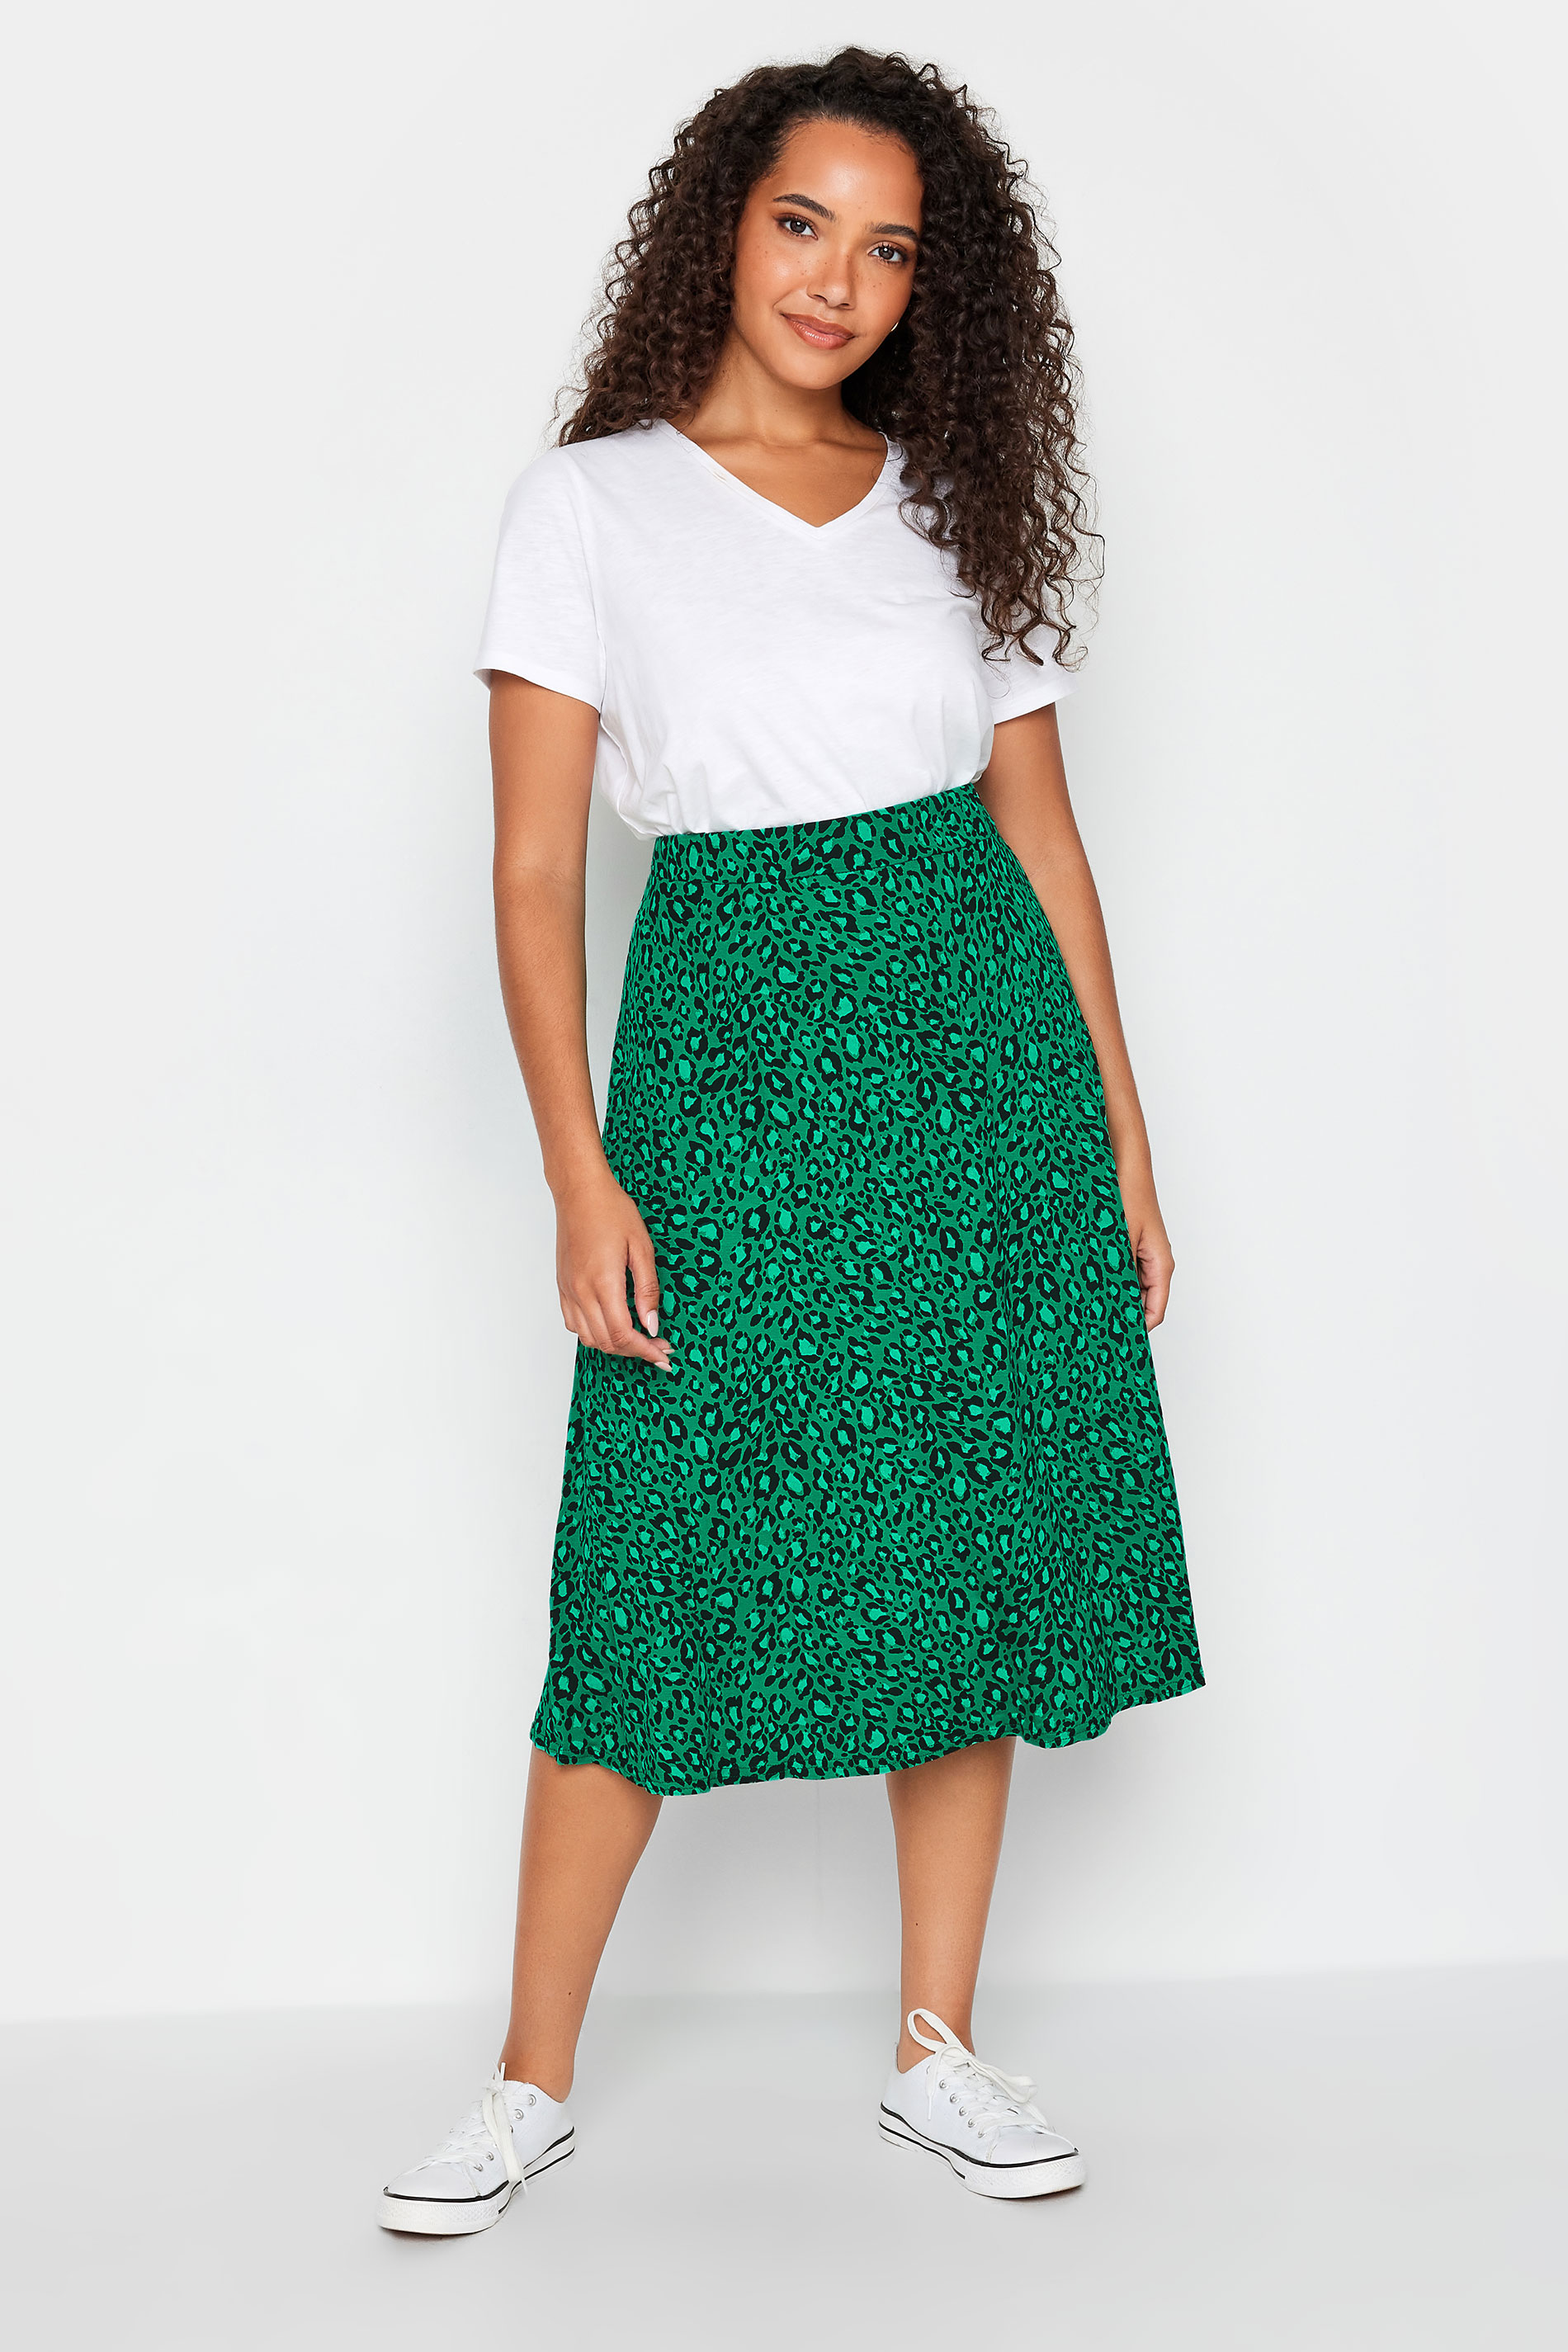 M&Co Green Leopard Print Jersey Midi Skirt | M&Co 2